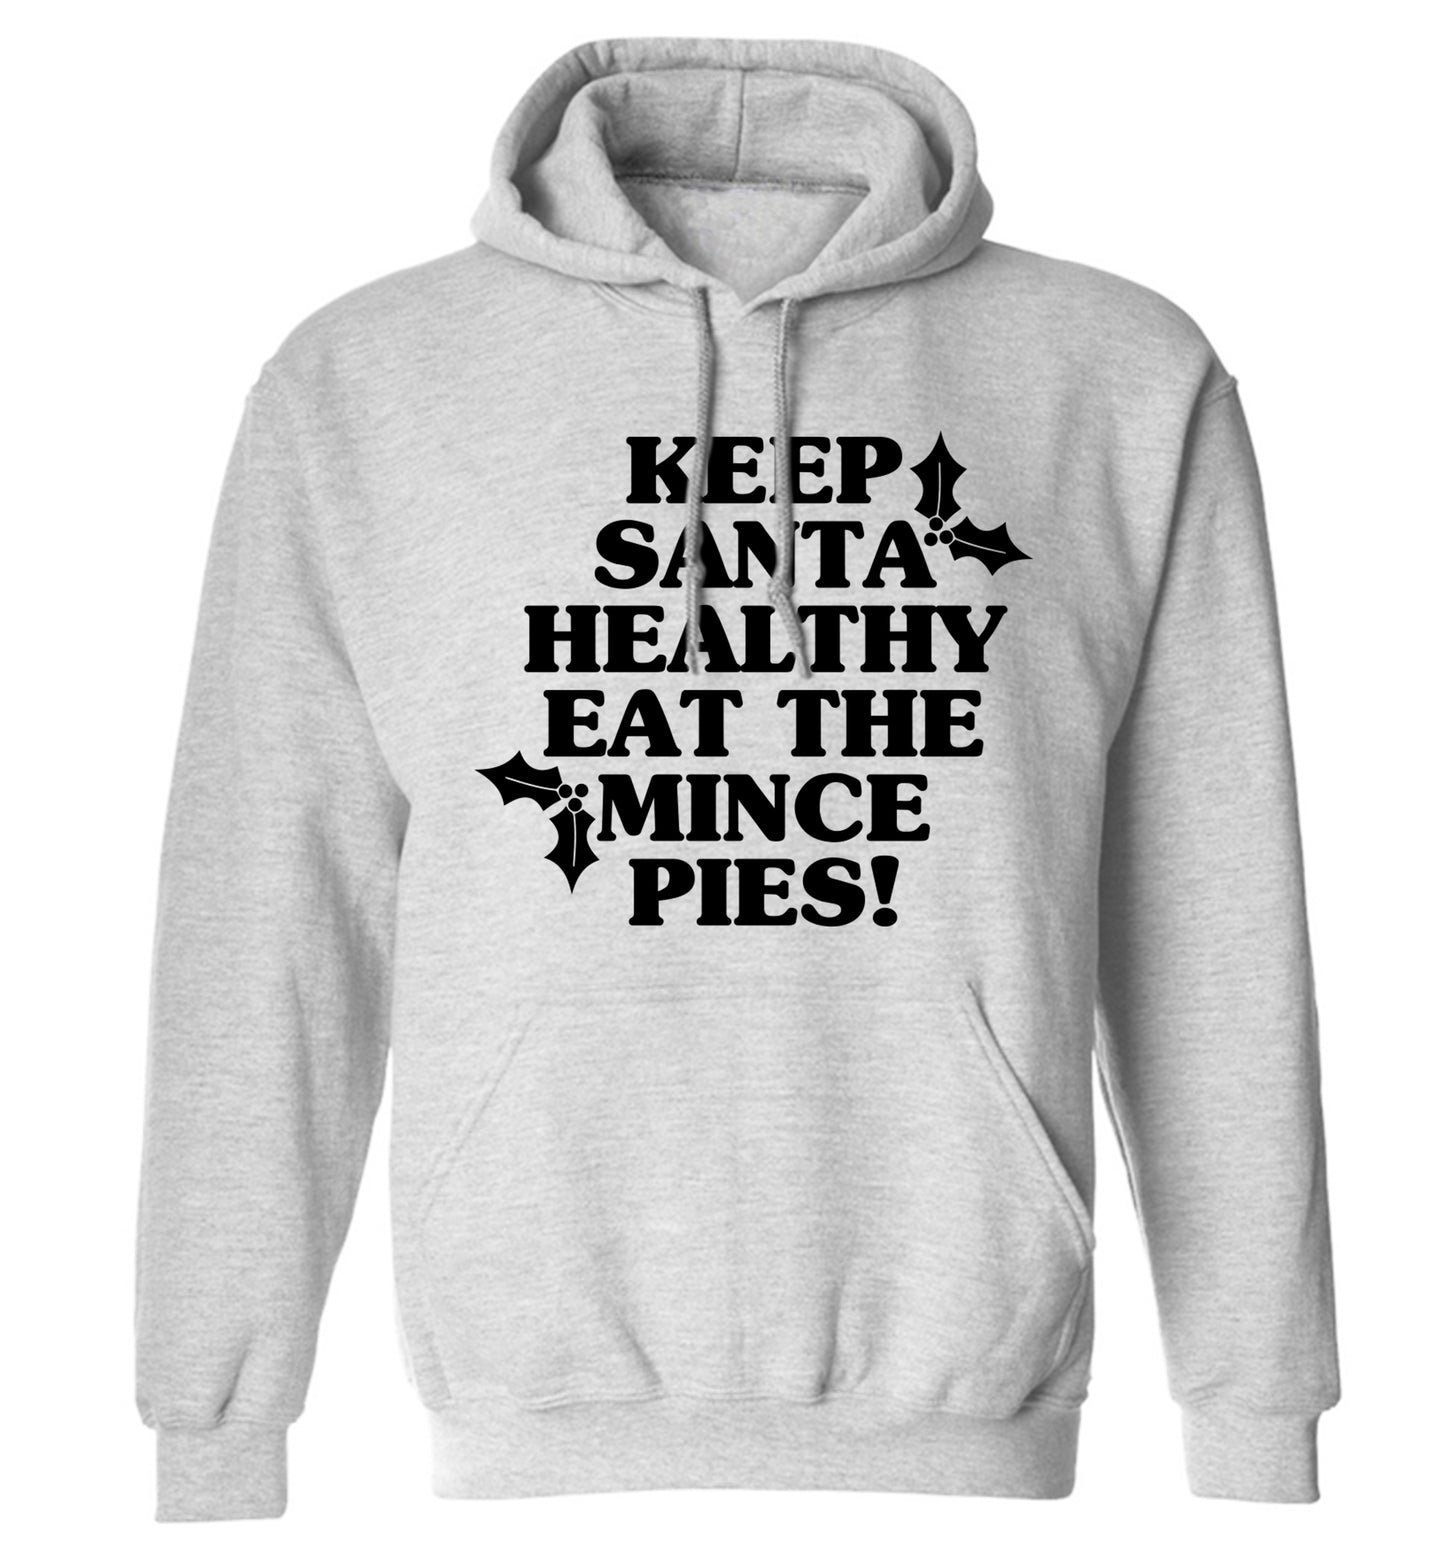 Keep santa healthy eat the mince pies adults unisex grey hoodie 2XL